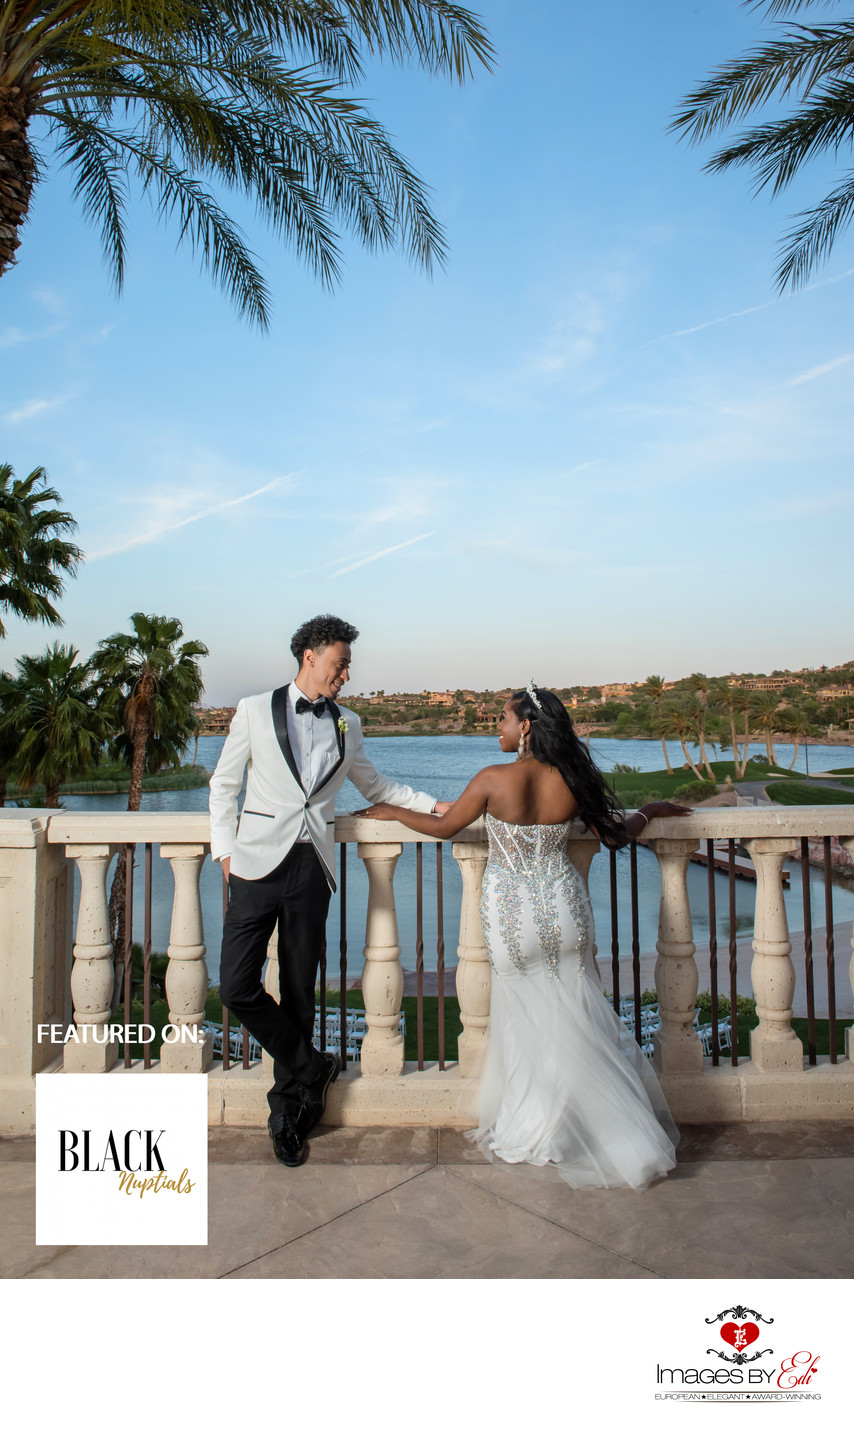 Reflection Bay Golf Club Las Vegas wedding is featured on Black Nuptials Wedding Blog